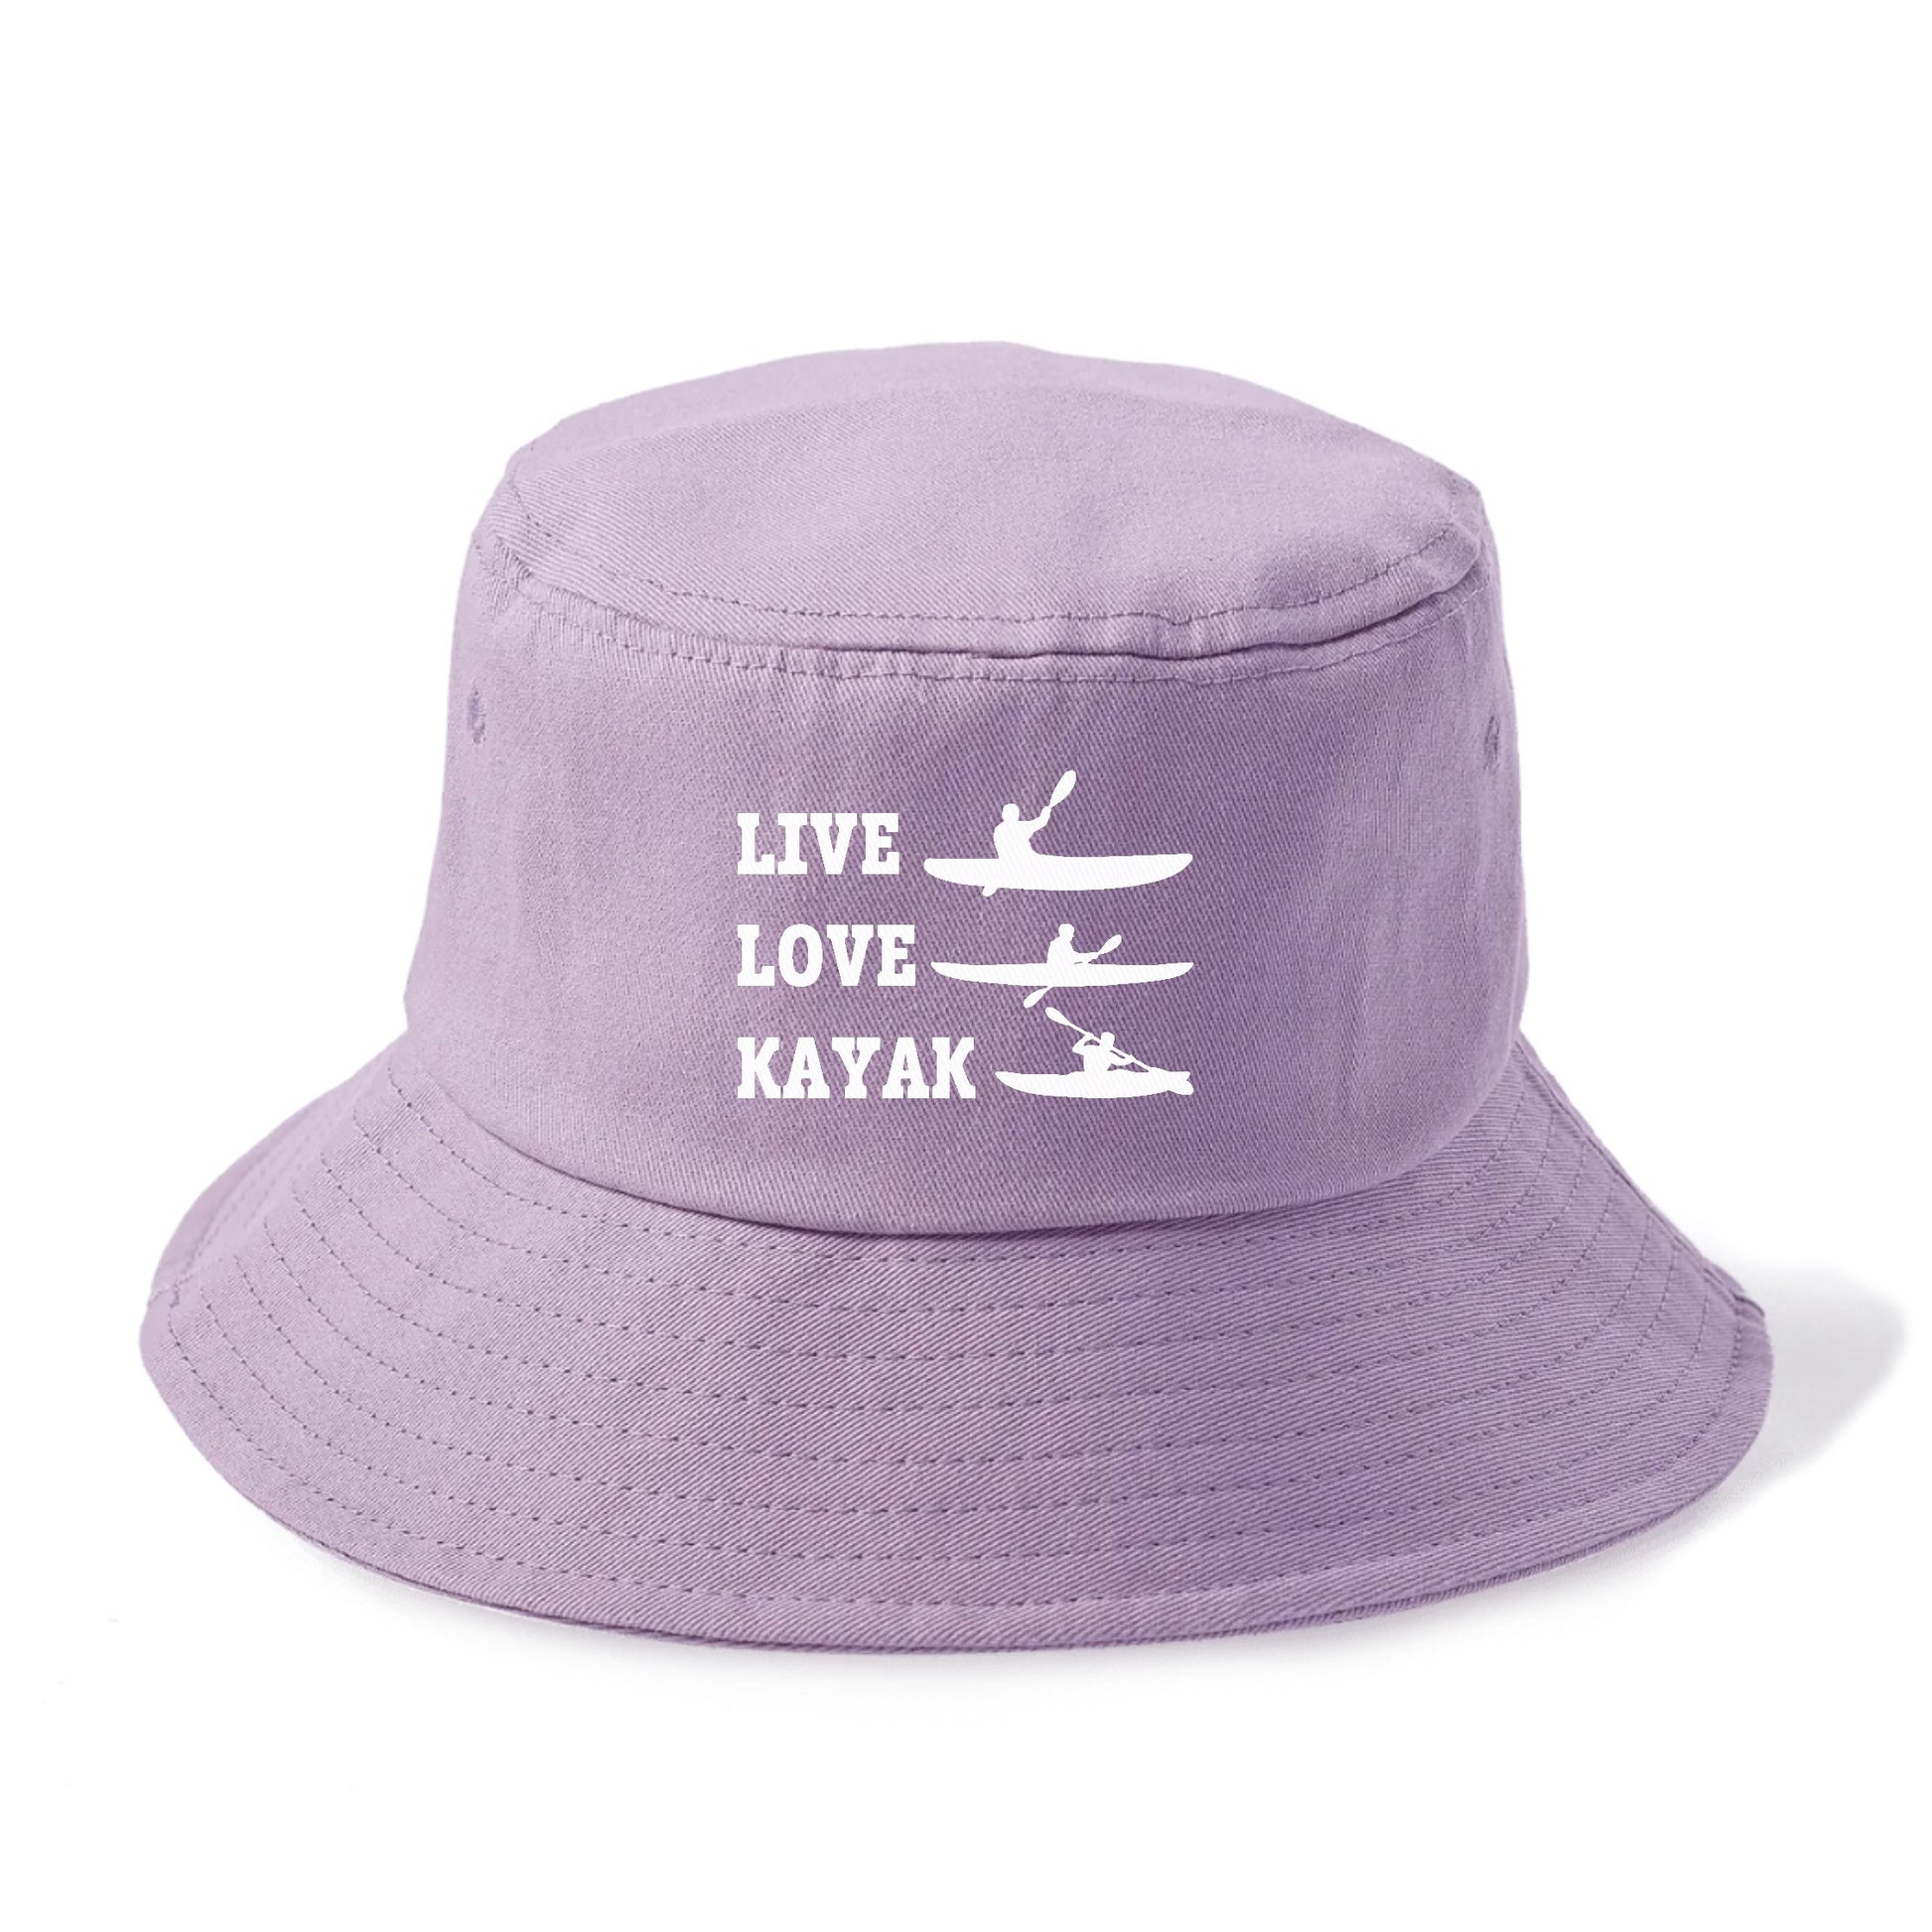 live love kayak! Hat